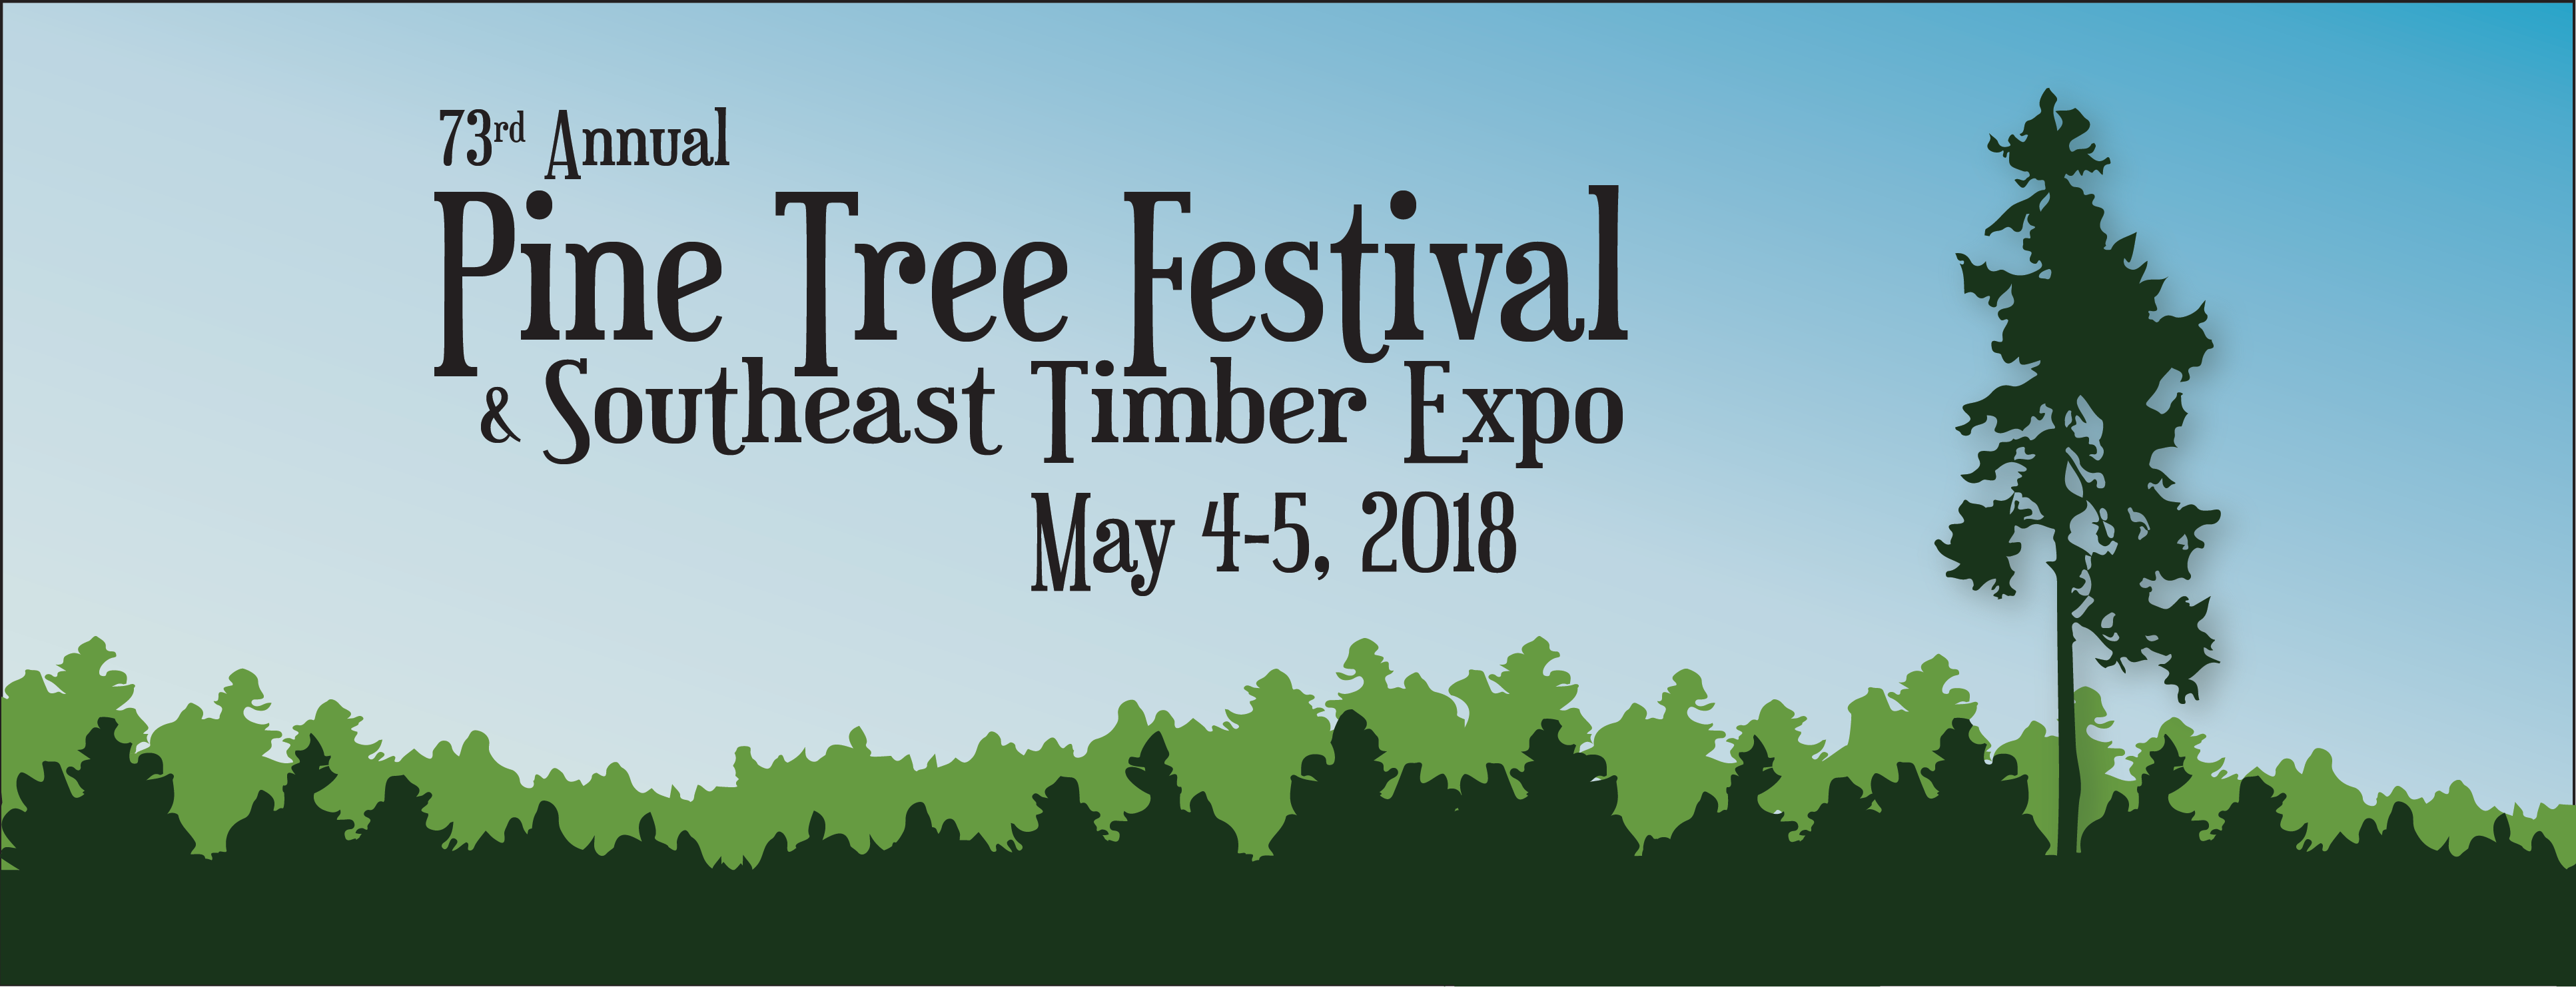 Pine Tree Festival & Southeast Timber Expo Longest